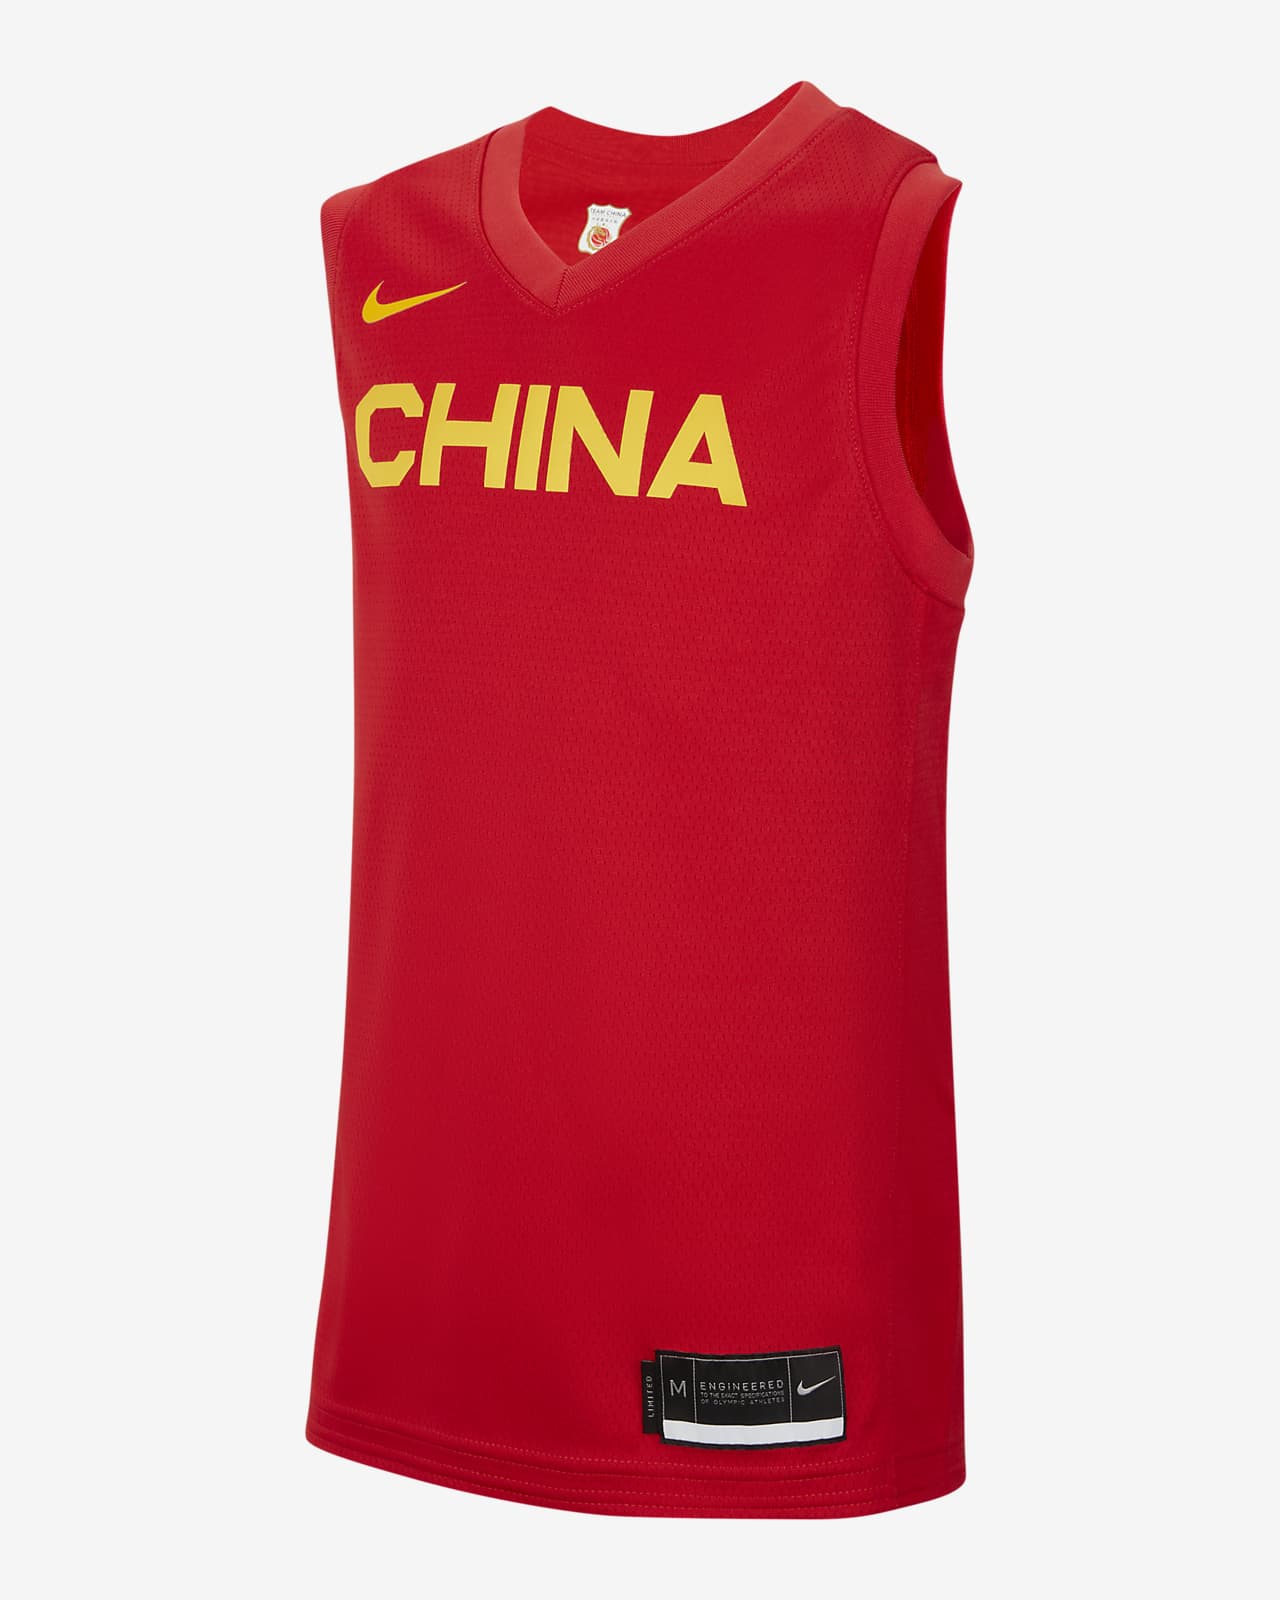 Maglia da basket Nike Cina (Road) - Ragazzo/a